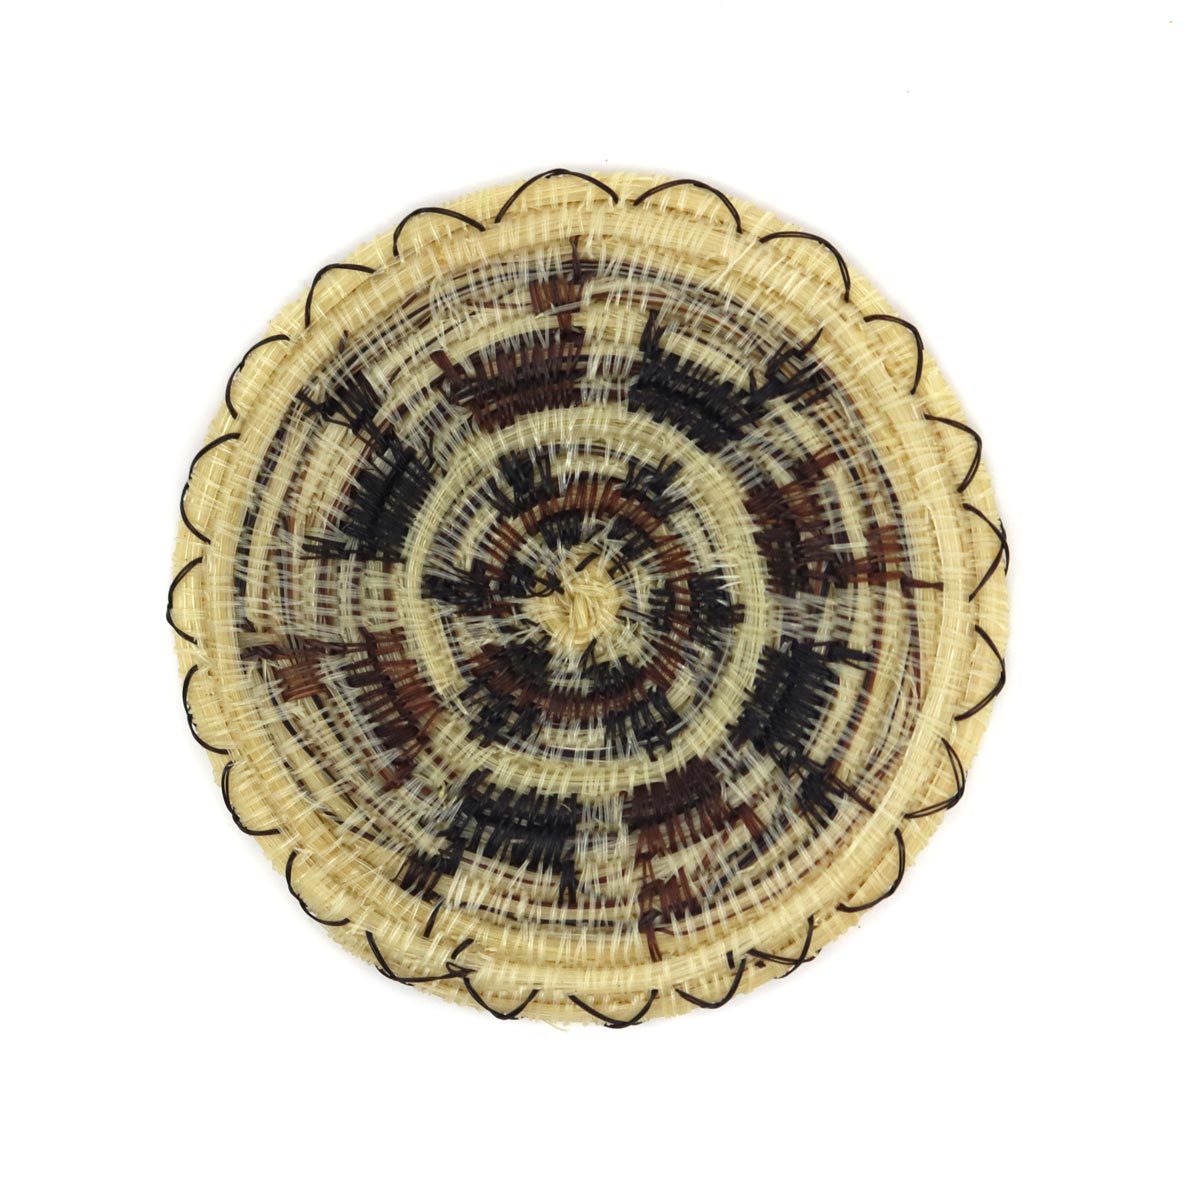 Tohono O'odham Contemporary Miniature Polychrome Horsehair Basket with Deer Pictorials, 2" diameter (SK3340)1
